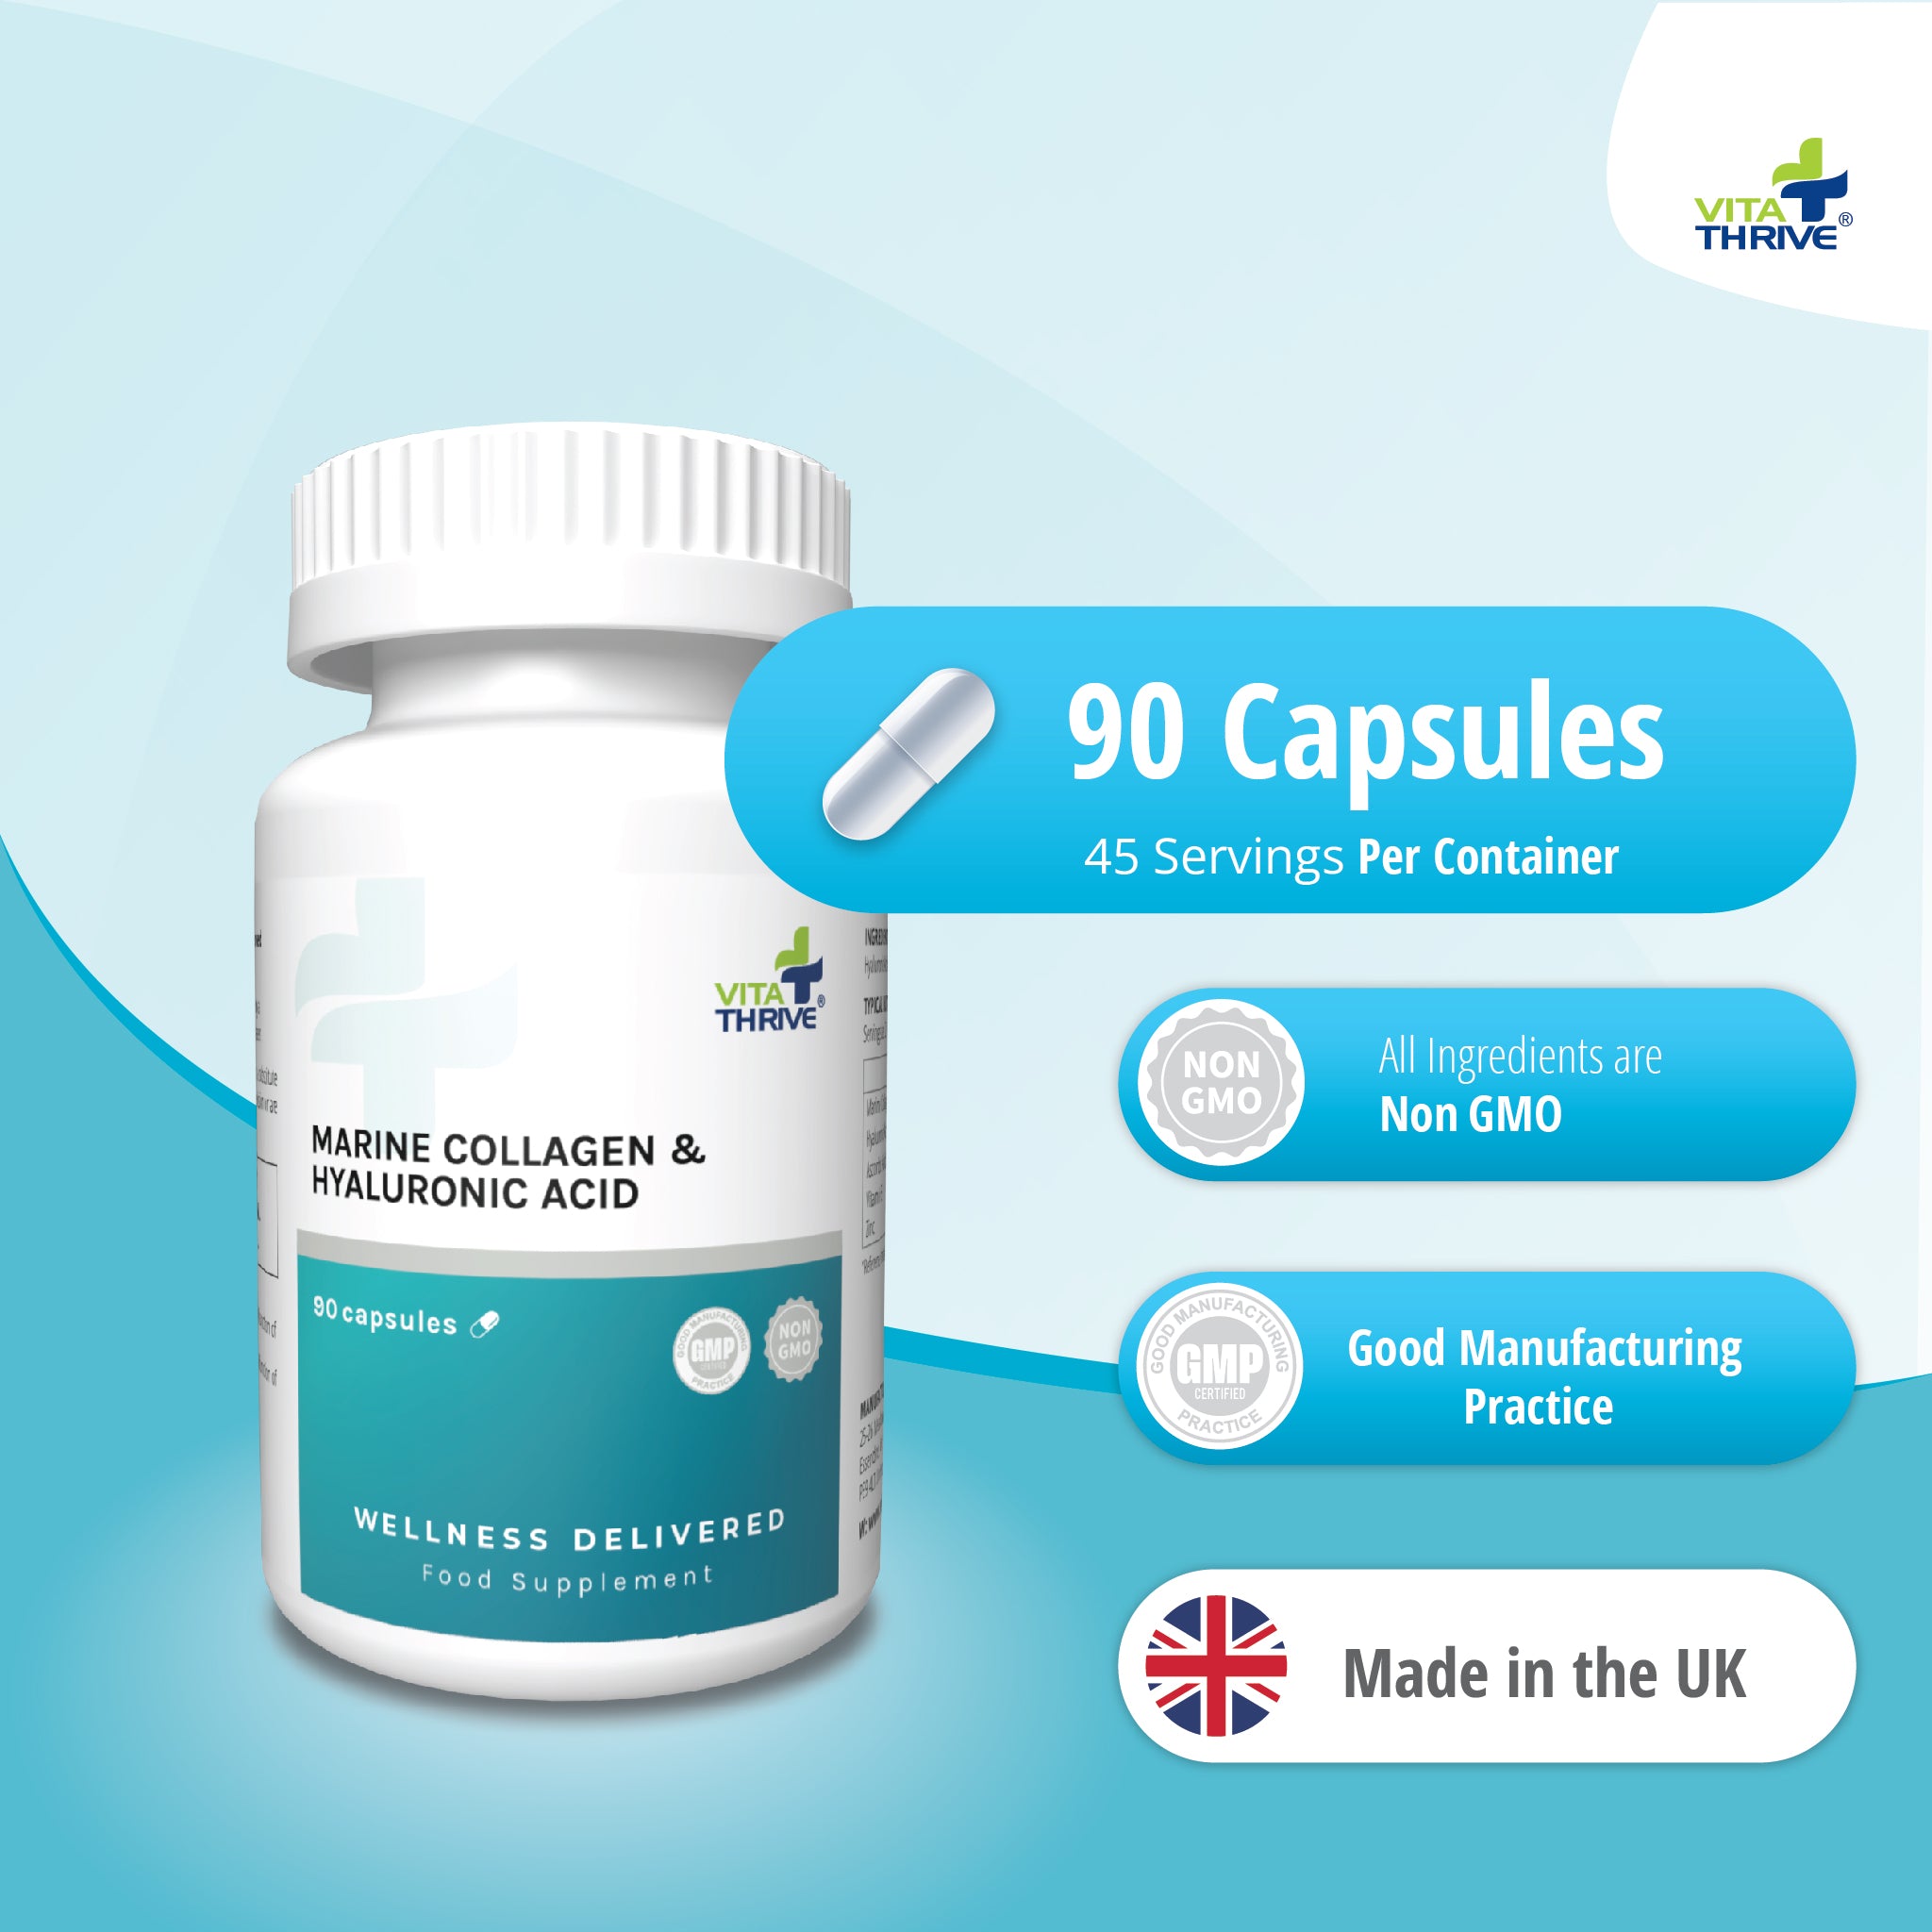 VitaThrive® Marine Collagen & Hyaluronic Acid - 90 Capsules